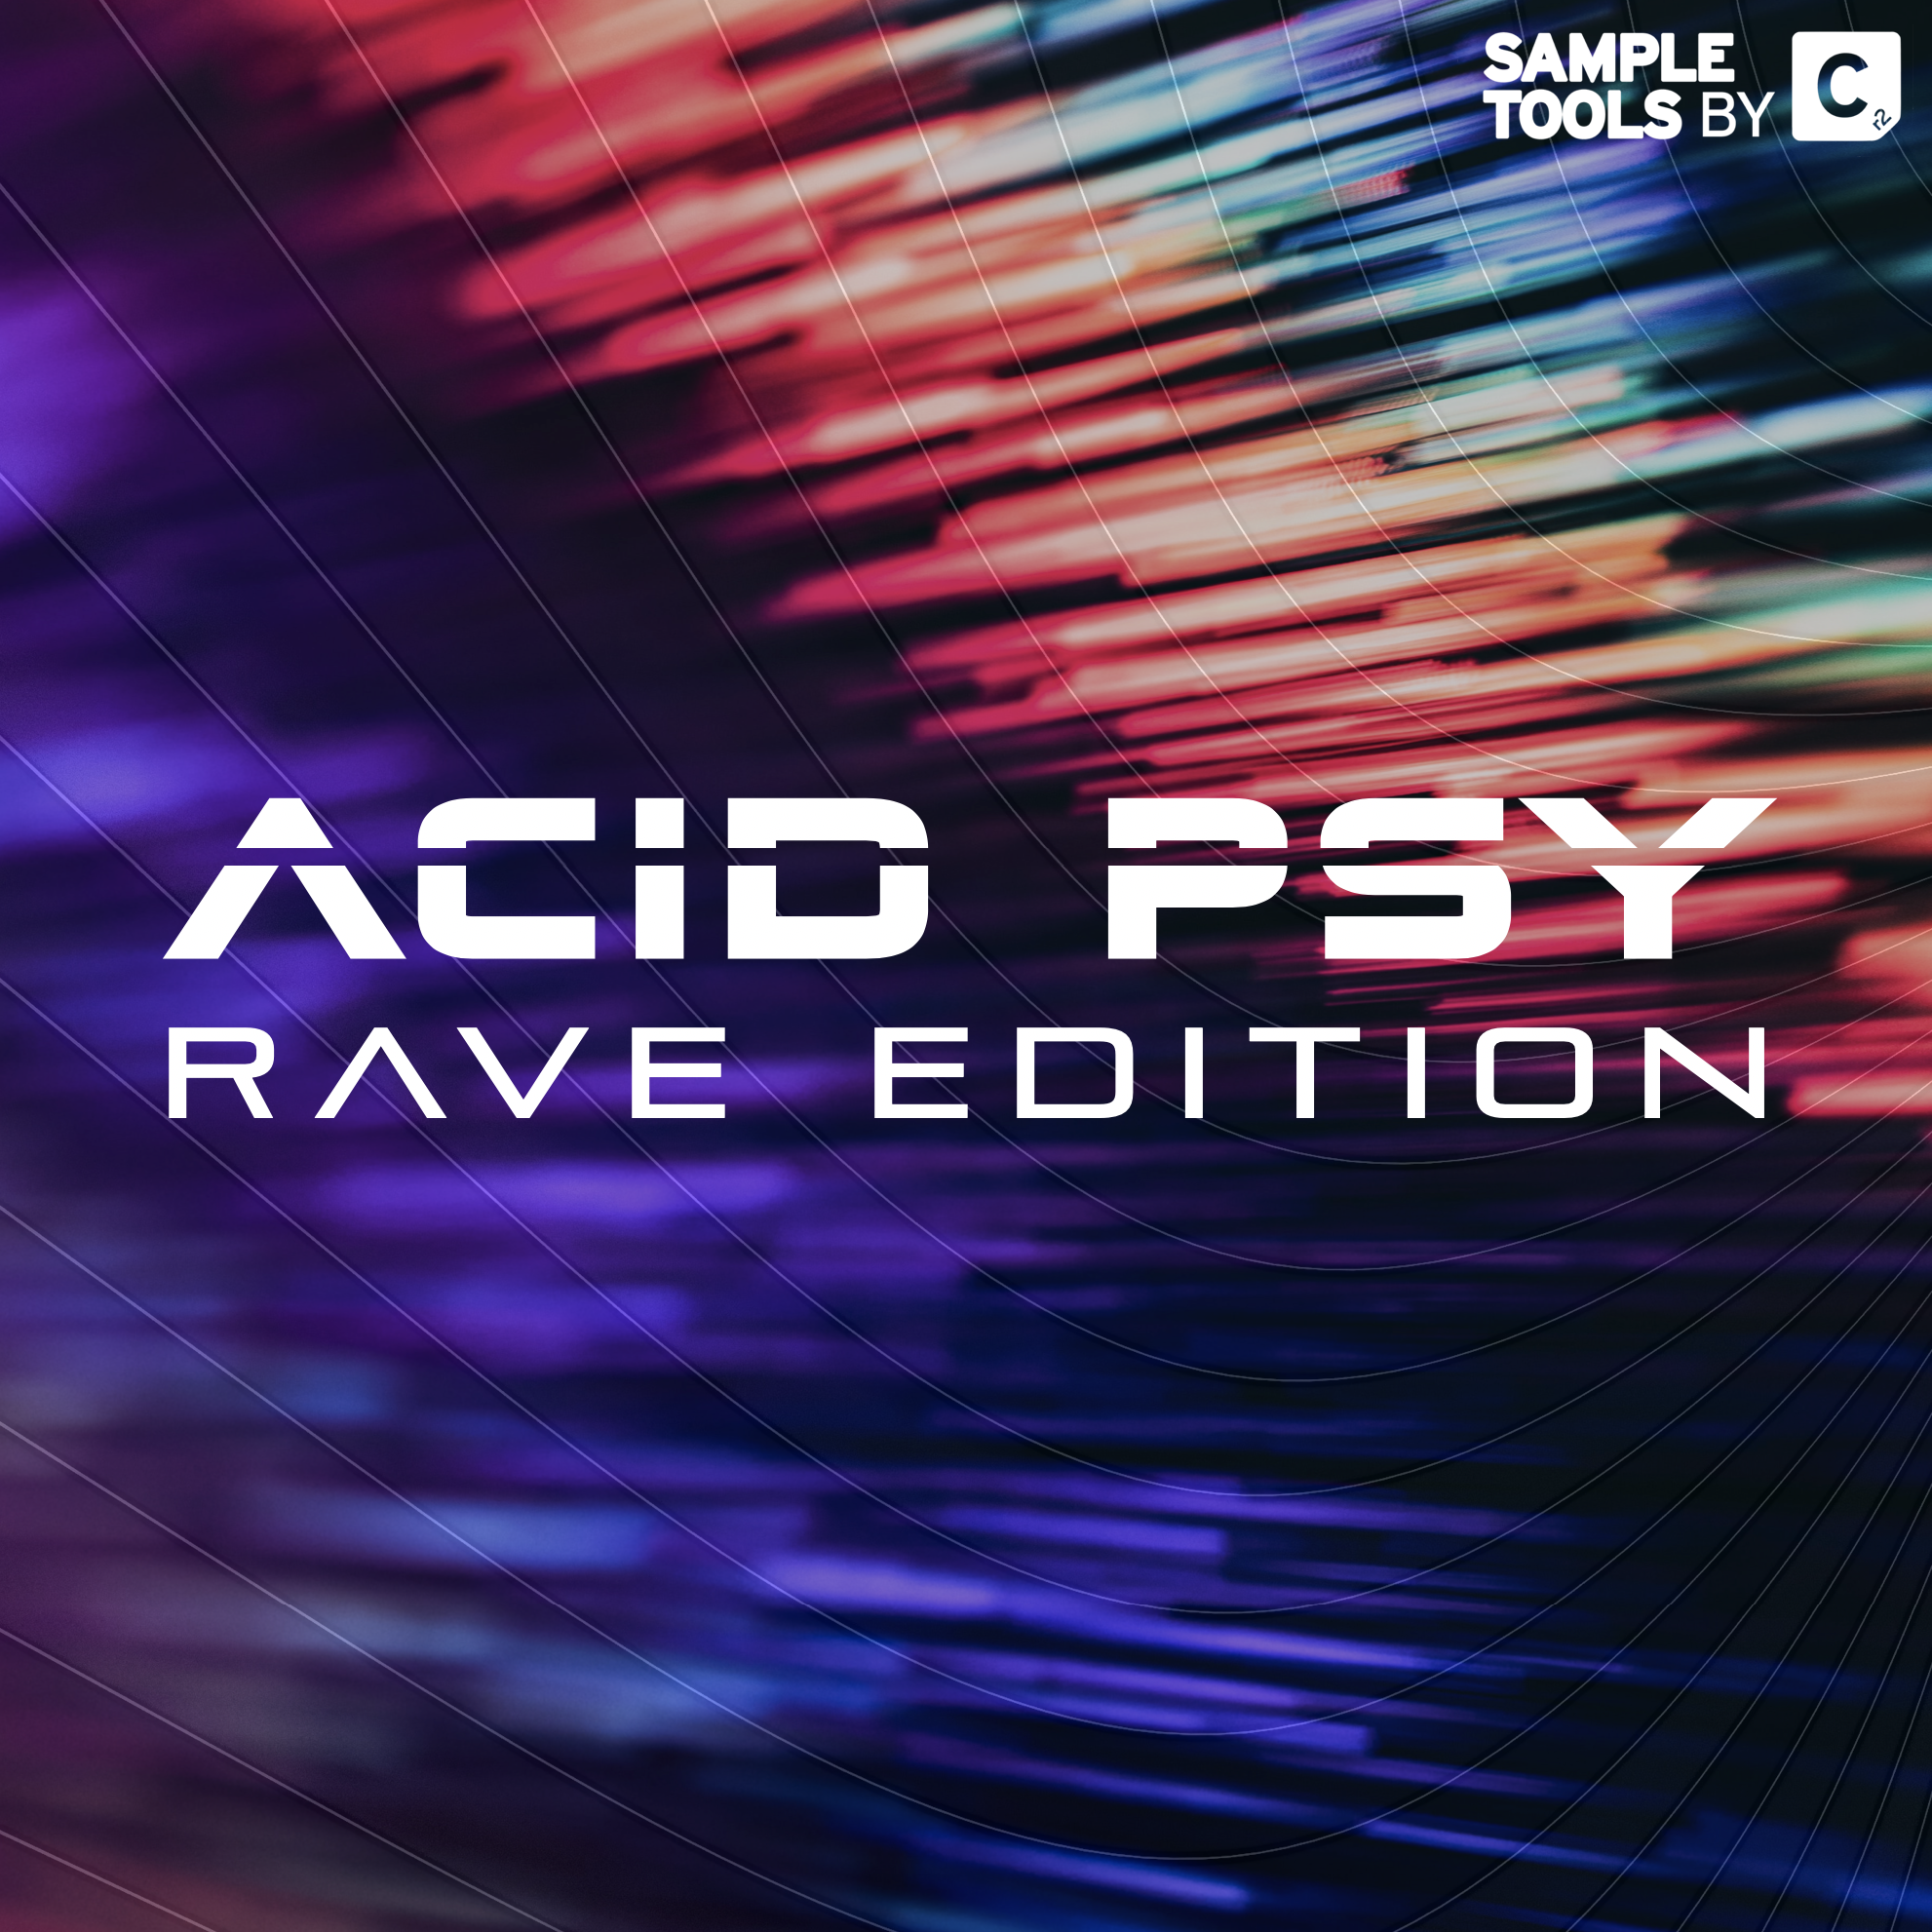 Acid PSY Rave Edition